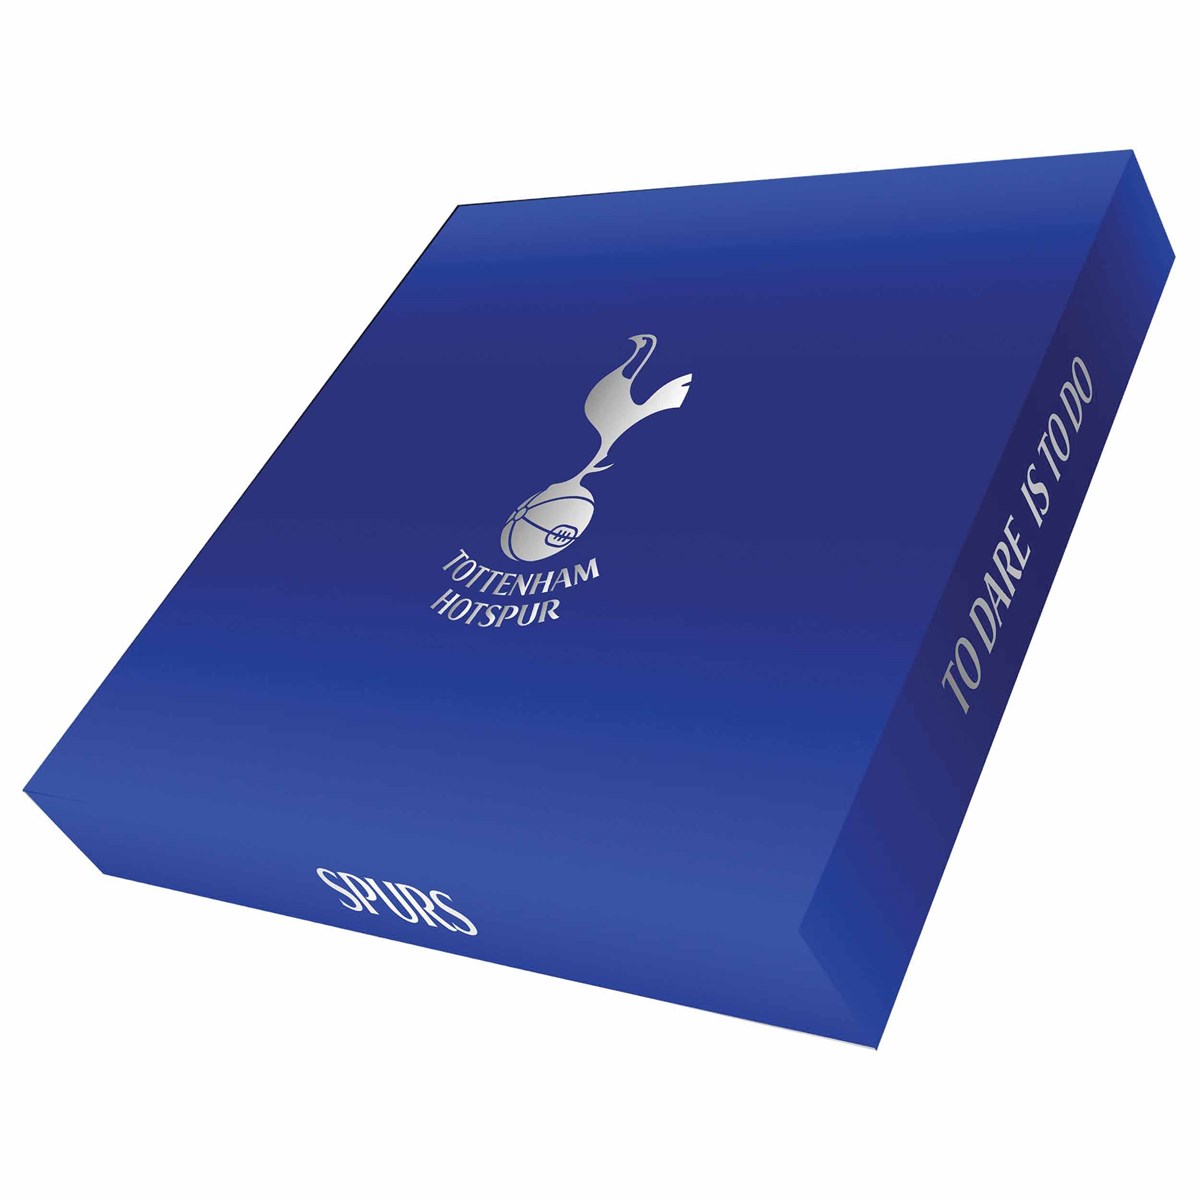 Tottenham Hotspur FC 2024 Calendar : Danilo: : Books